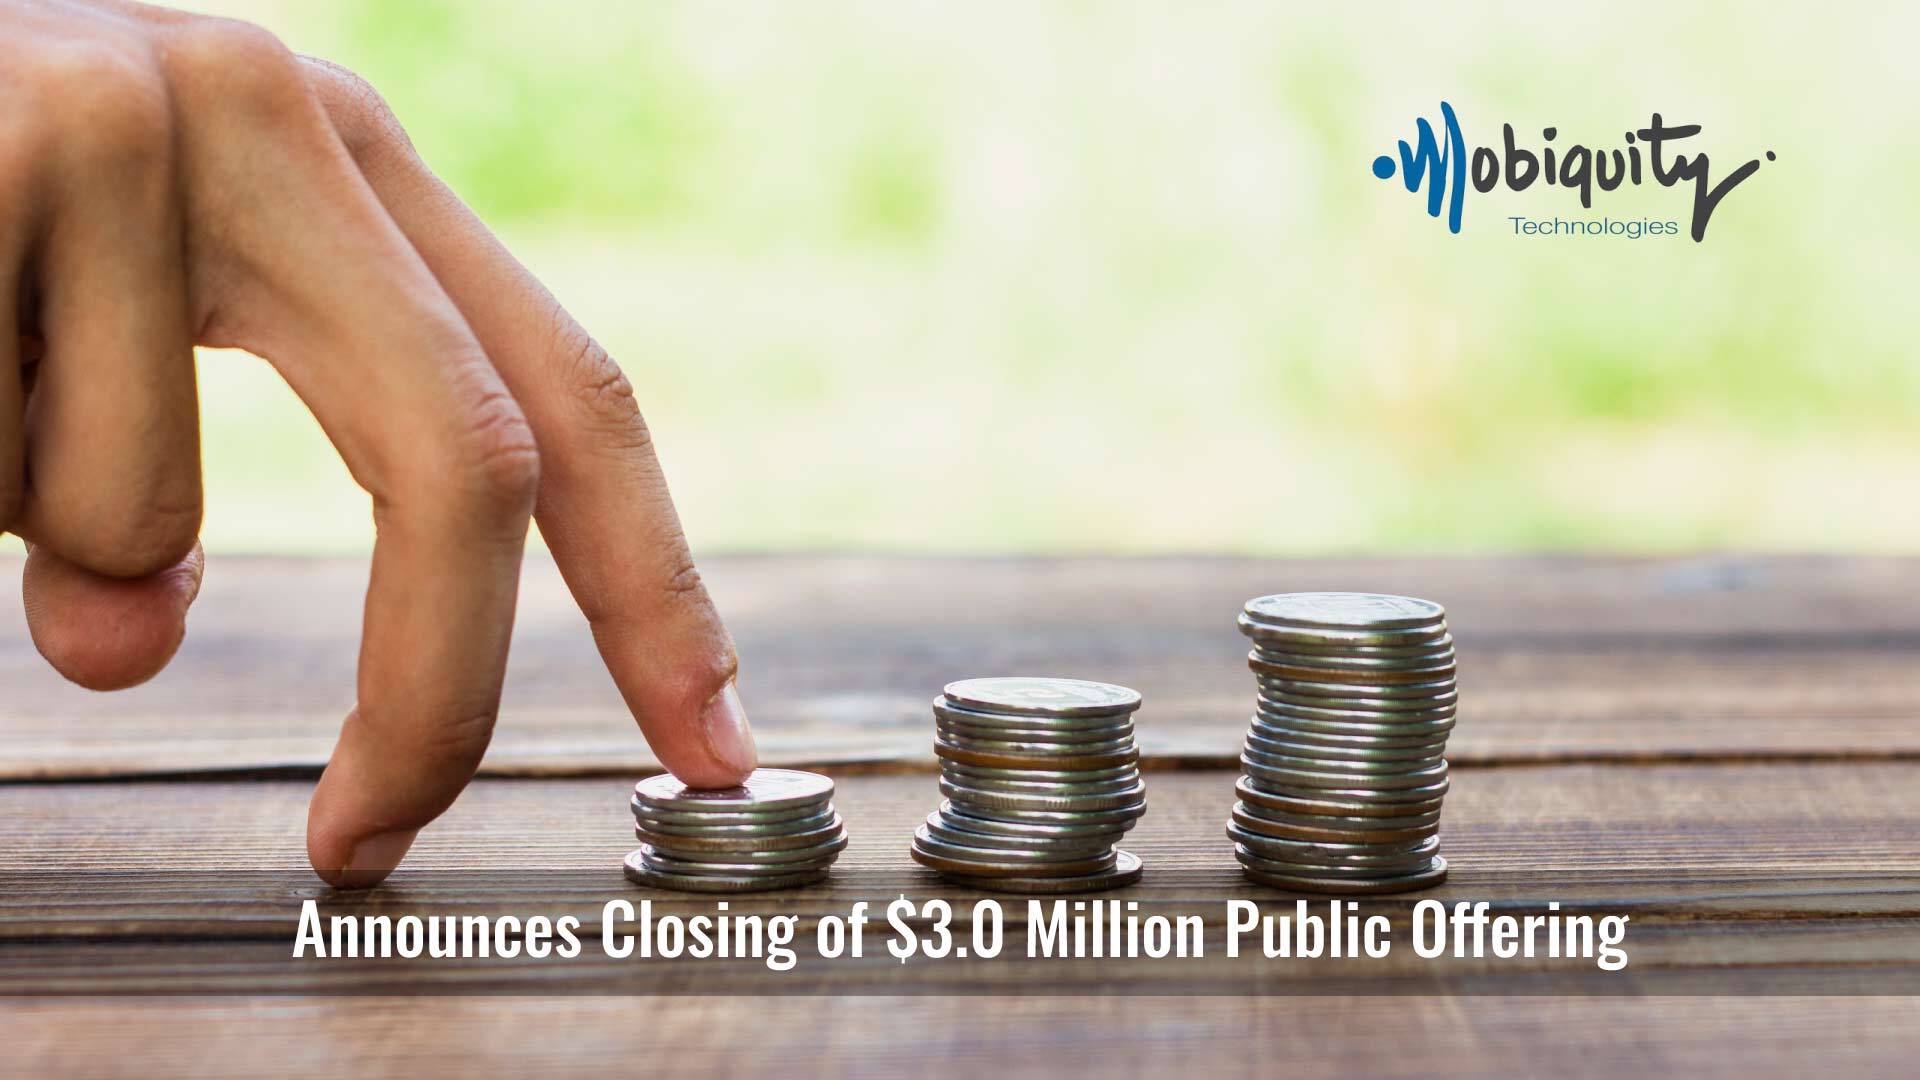 Mobiquity Technologies, Inc. Announces Closing of $3.0 Million Public Offering